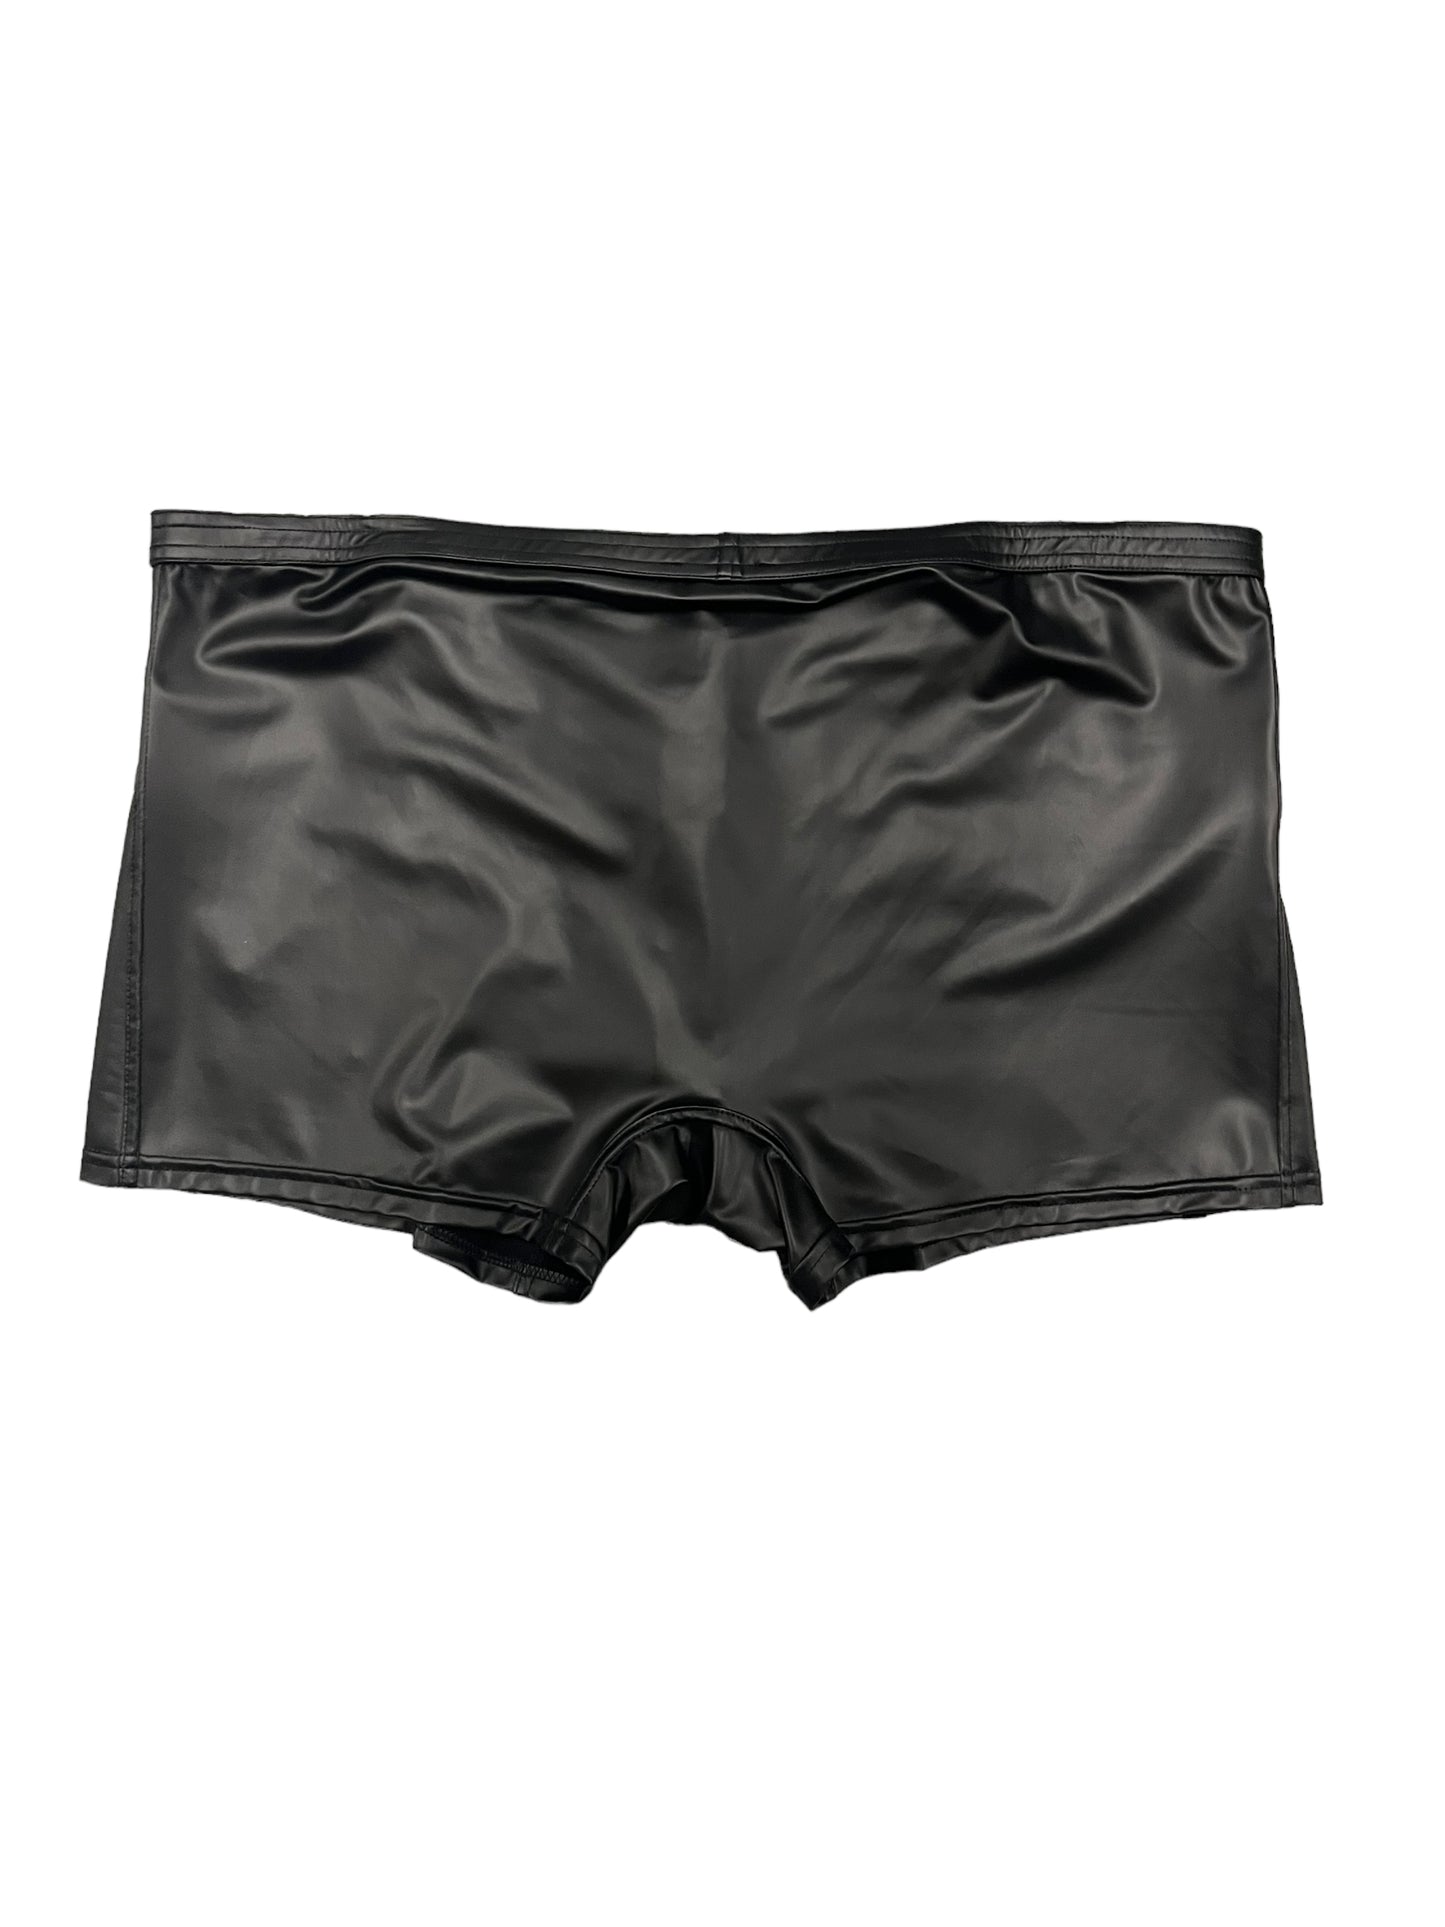 Noir - Black Men's Shorts - Size 5XL